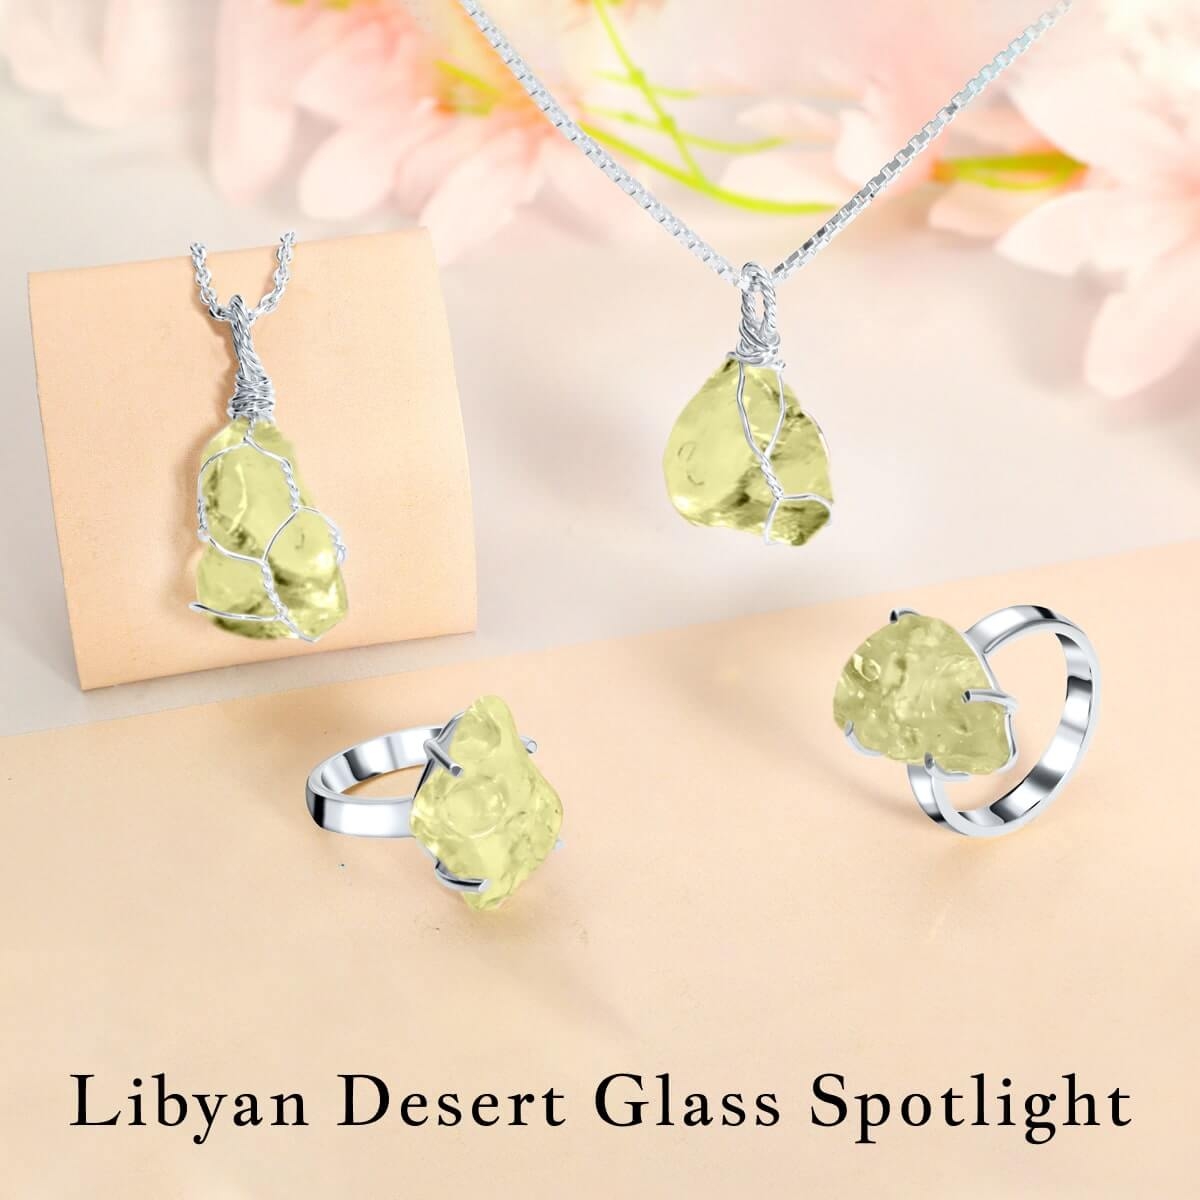 Libyan Desert Glass Benefits, Healing Properties, Uses, Cost, Zodiac Signs